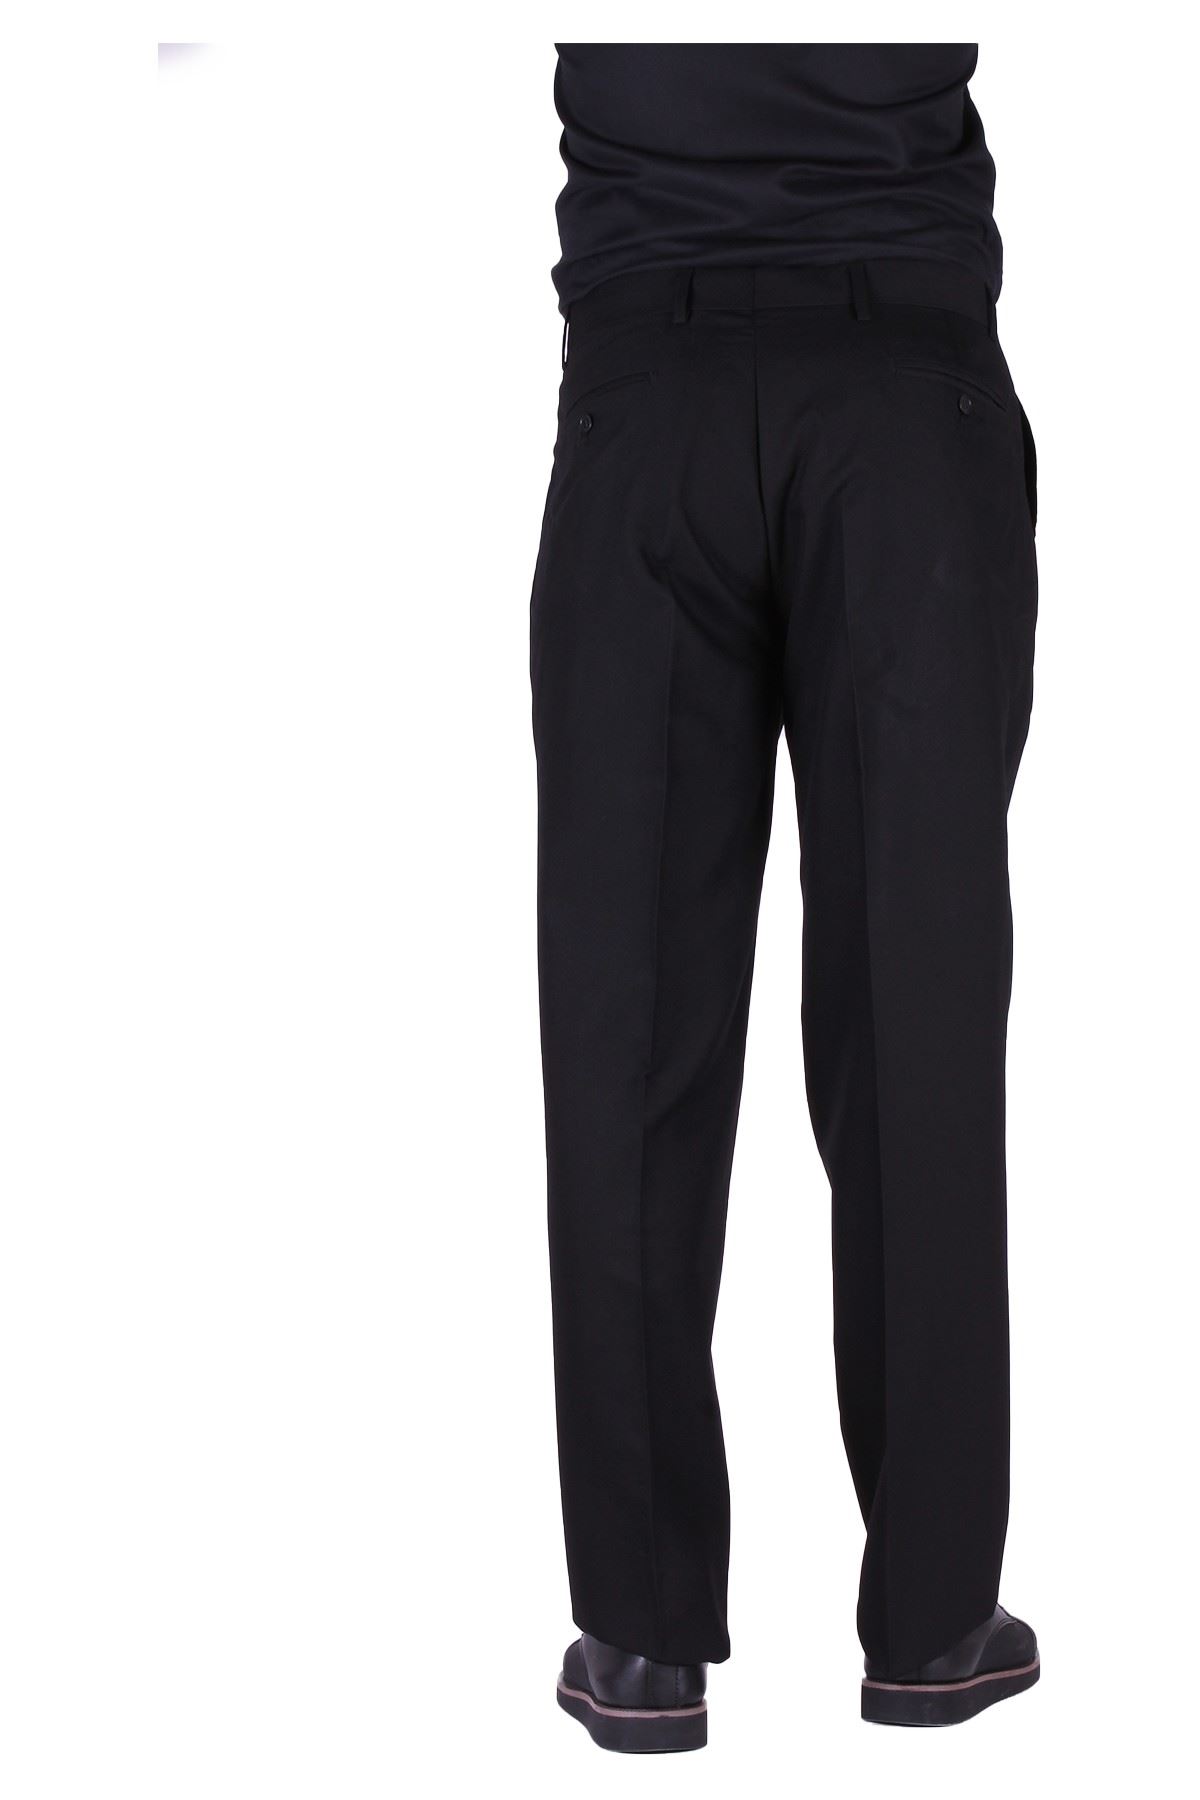 Giyinsen Erkek Siyah Klasik Pantolon - 23KL71M57002